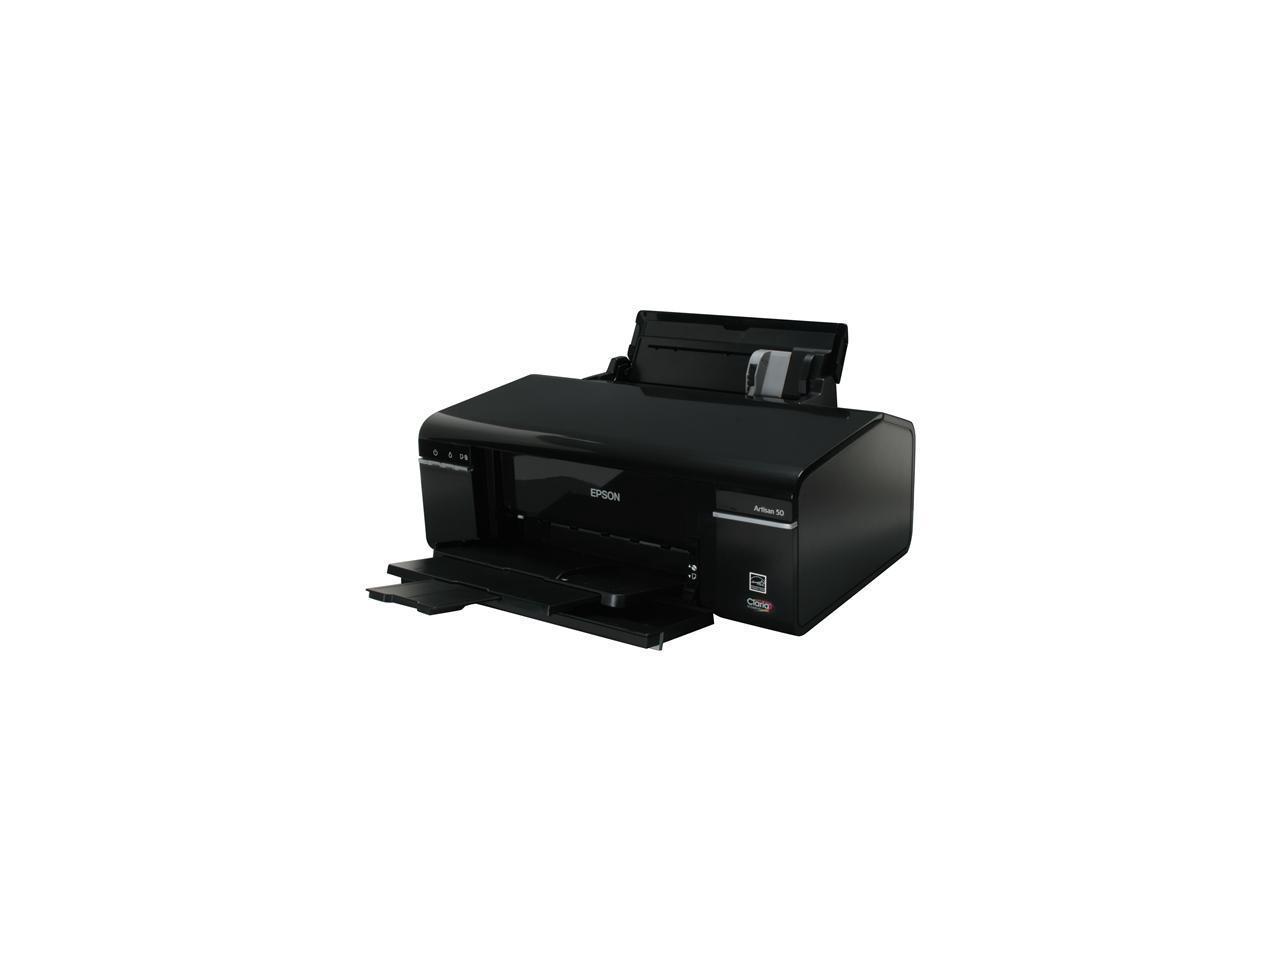 Epson Artisan Artisan 50 Inkjet Personal Color Printer Neweggca 0680